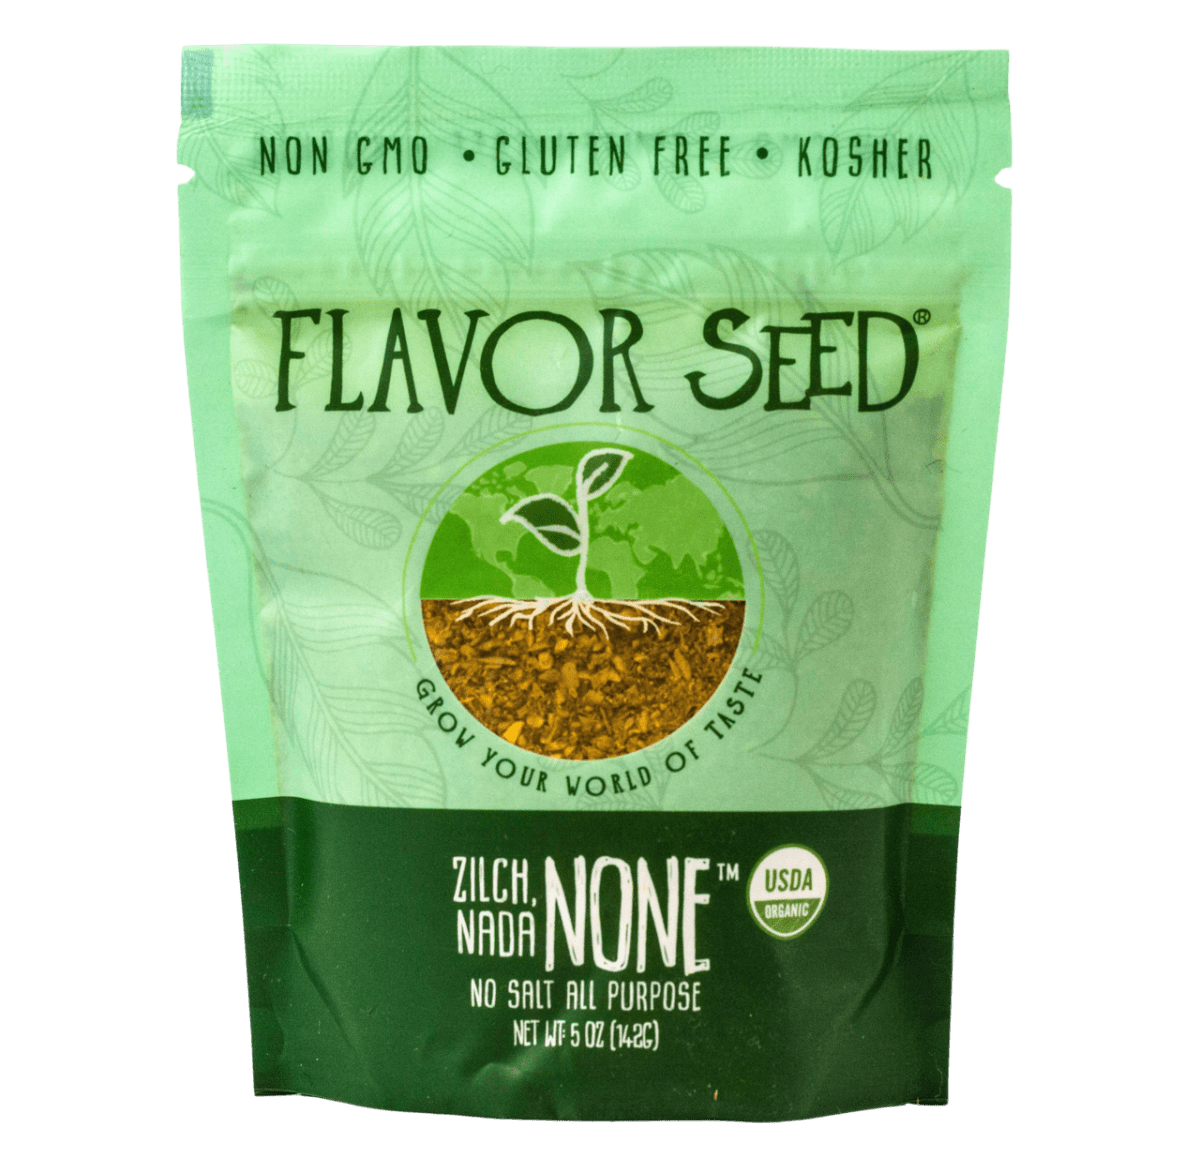 FLAVOR SEED - Zilch. Nada. None. No Salt Organic All Purpose Turmeric Seasoning - Flavor Seed